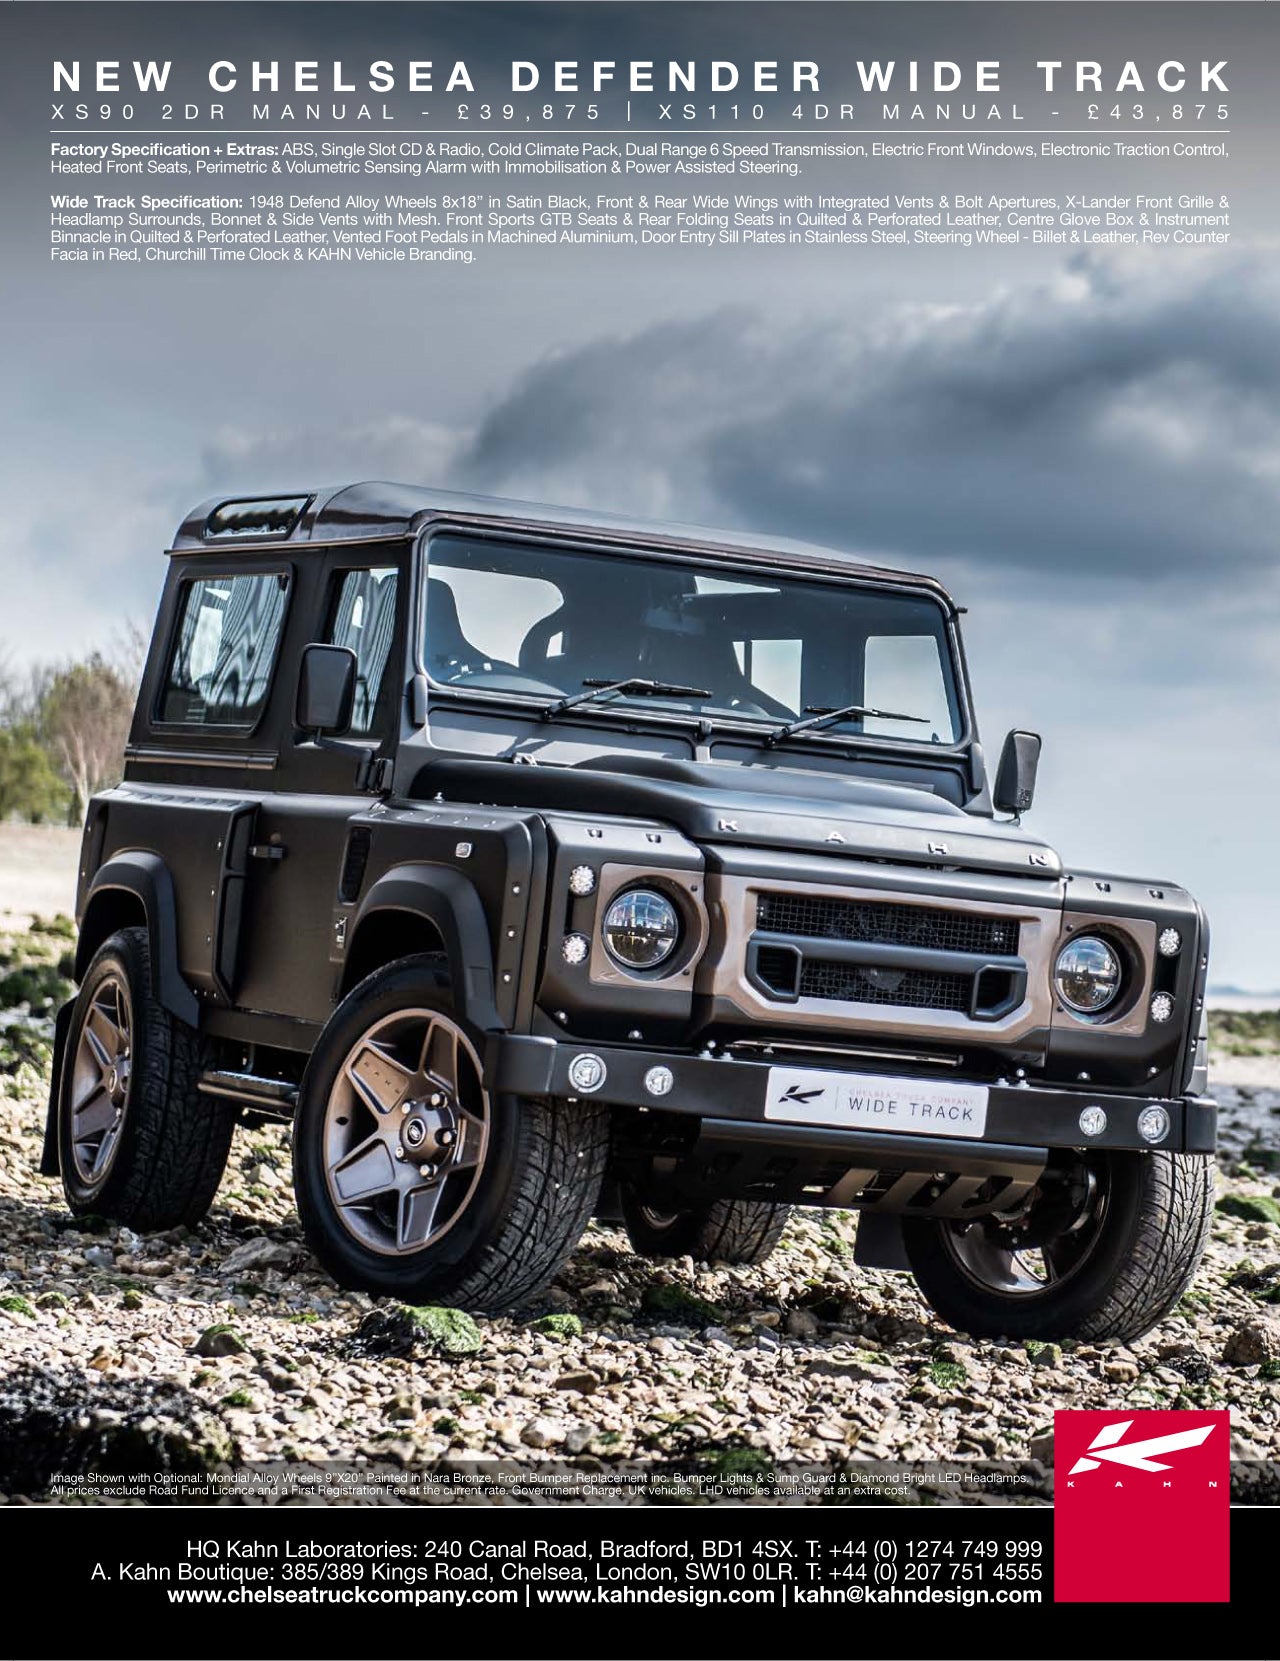 Top Gear Magazine 2014